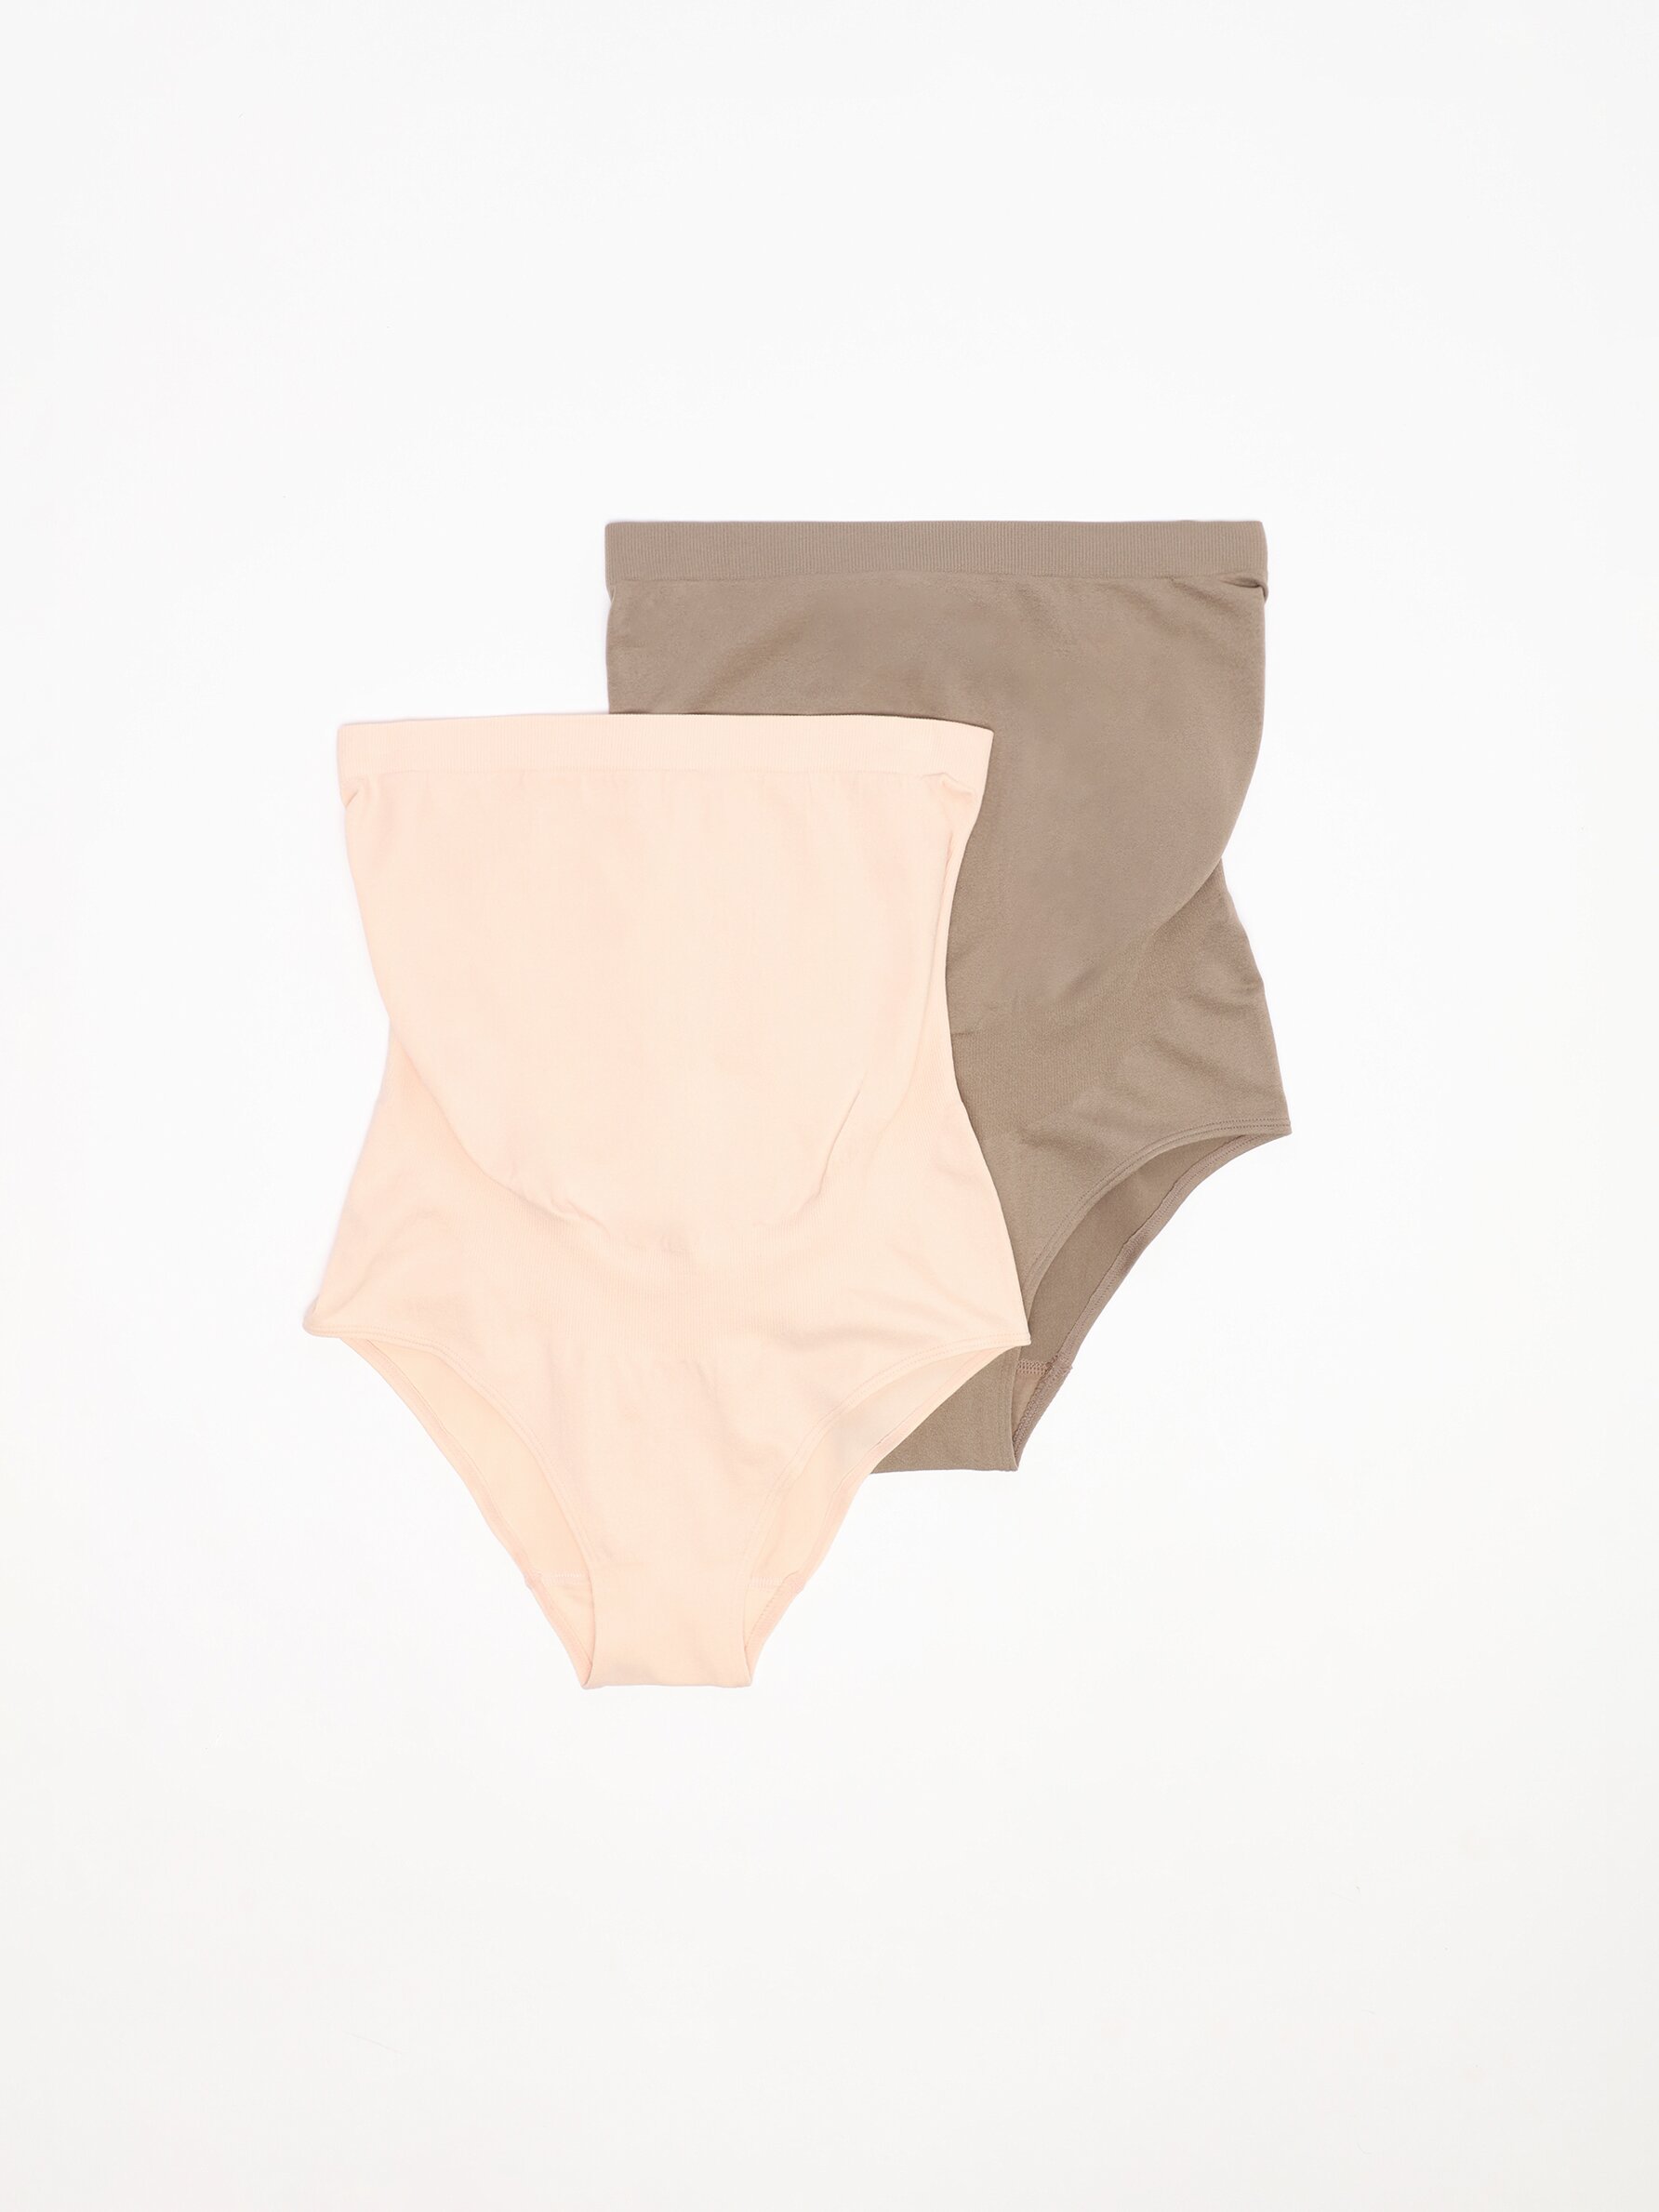 Pack of 2 high-waist maternity briefs - Briefs - Underwear - CLOTHING -  Woman 